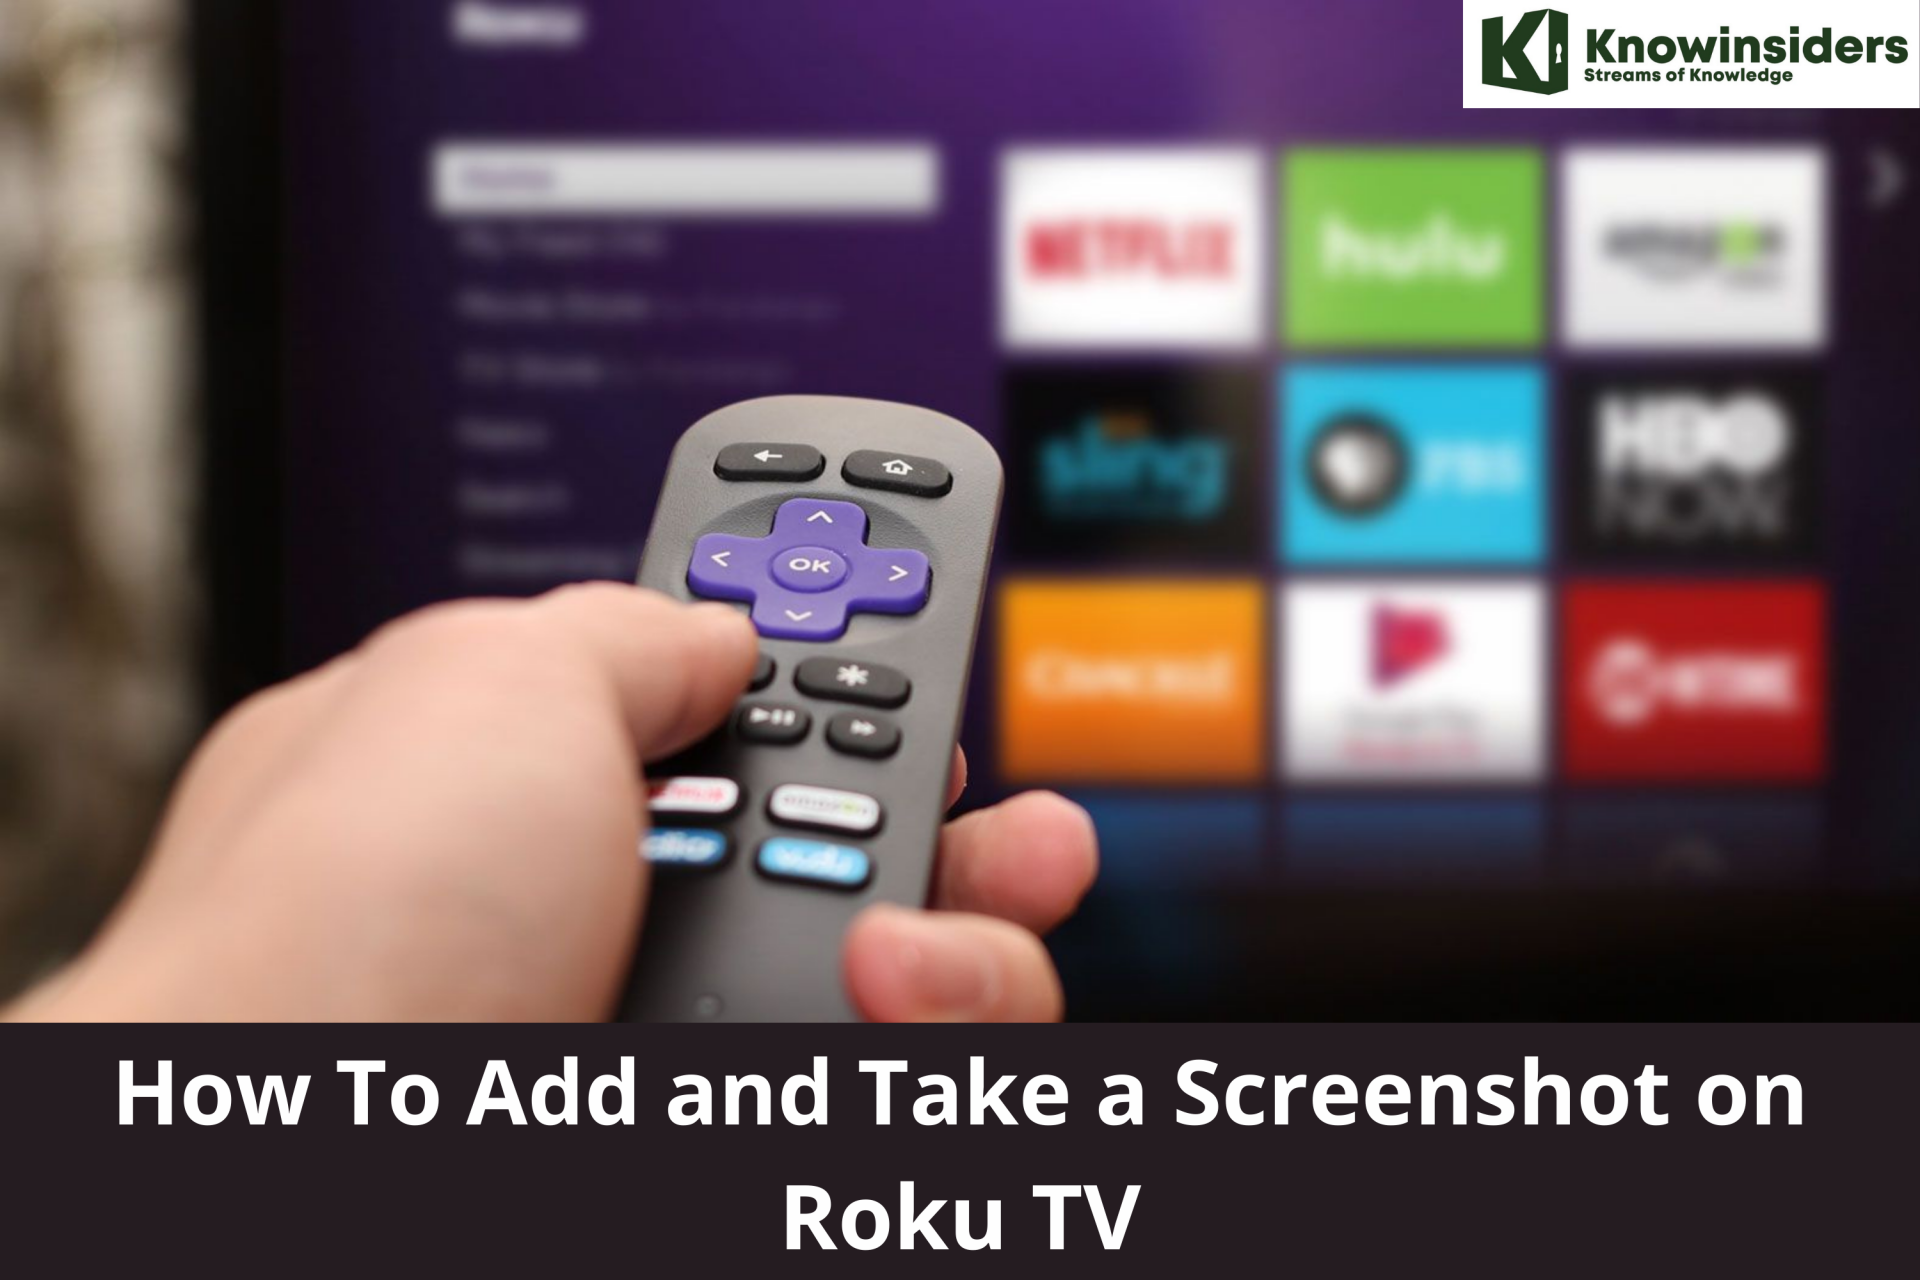 How To Add and Take a Screenshot on Roku TV